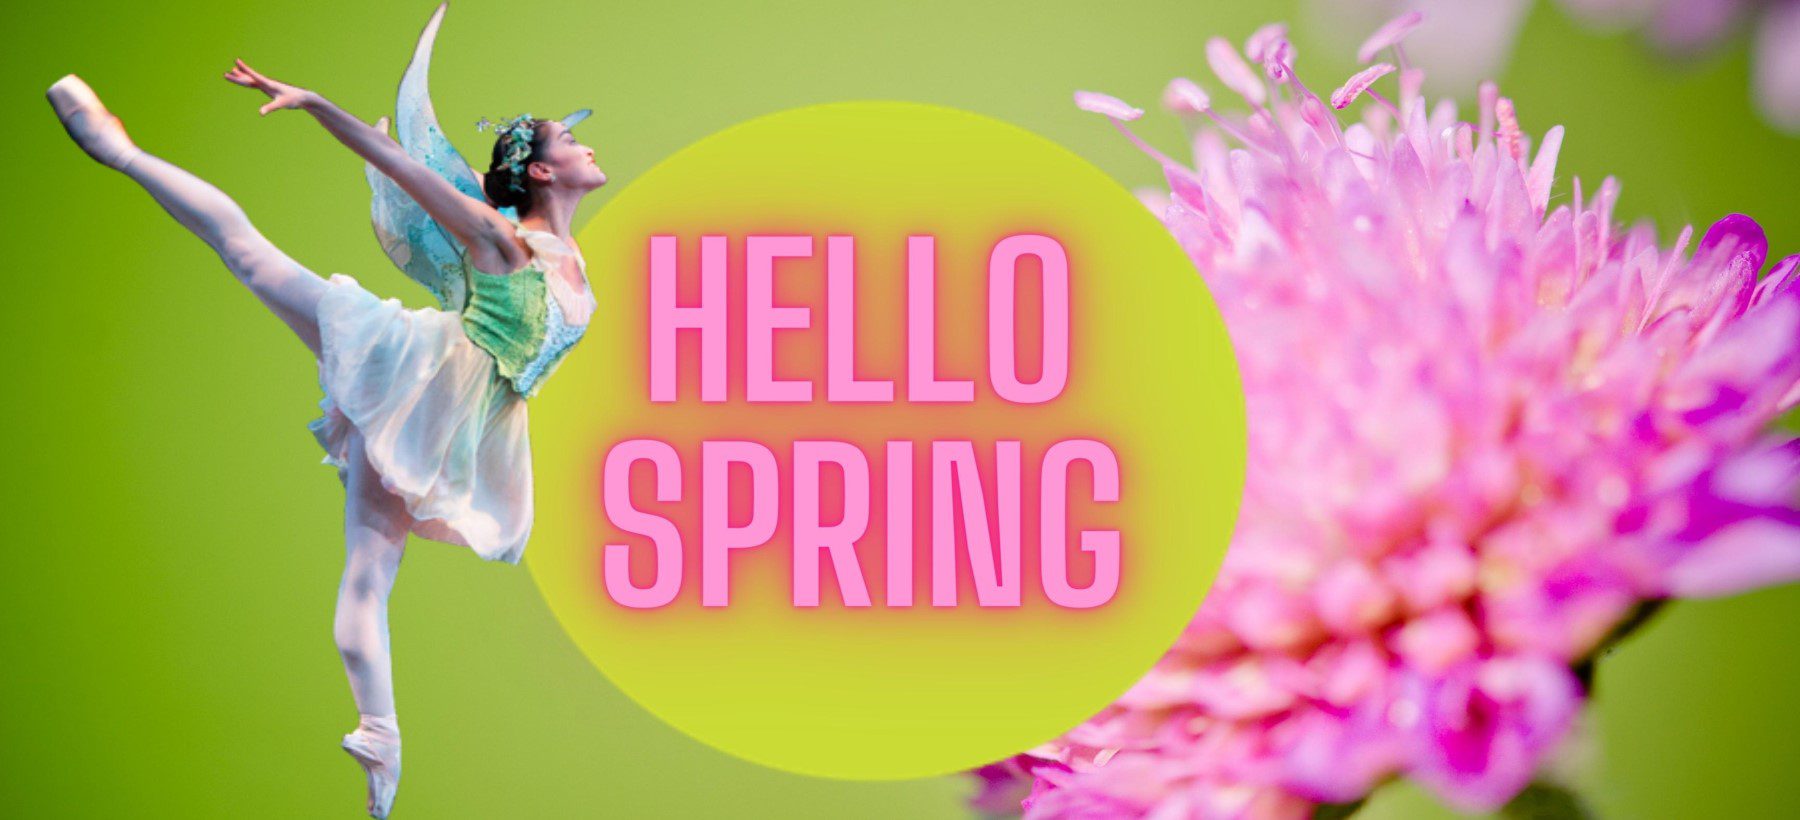 Decorative image: Ballet dancer, "HELLO SPRING", flower